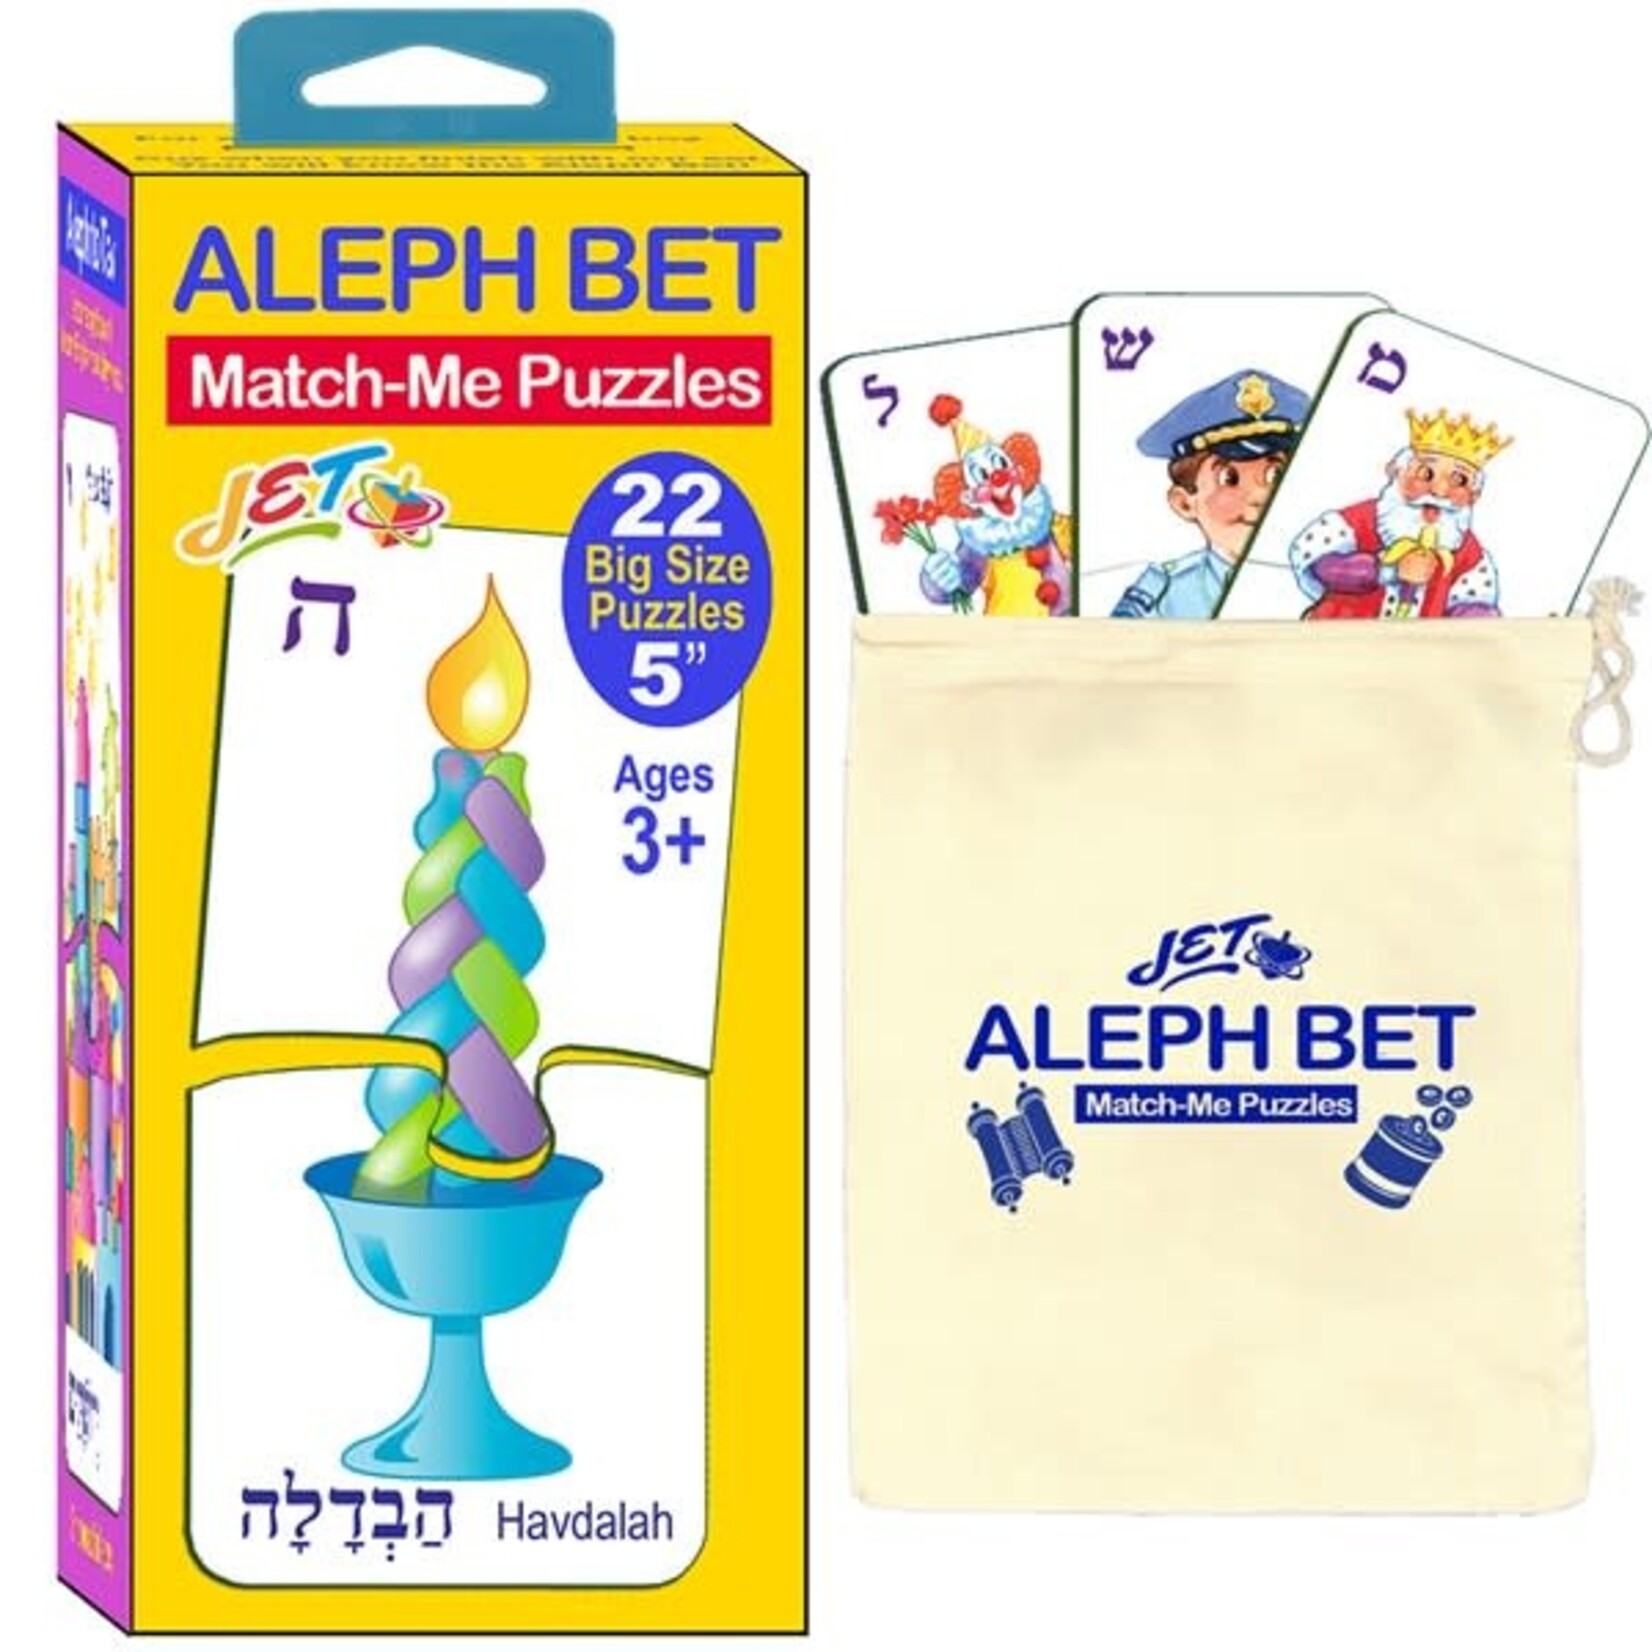 Aleph Bet Match-Me Puzzles